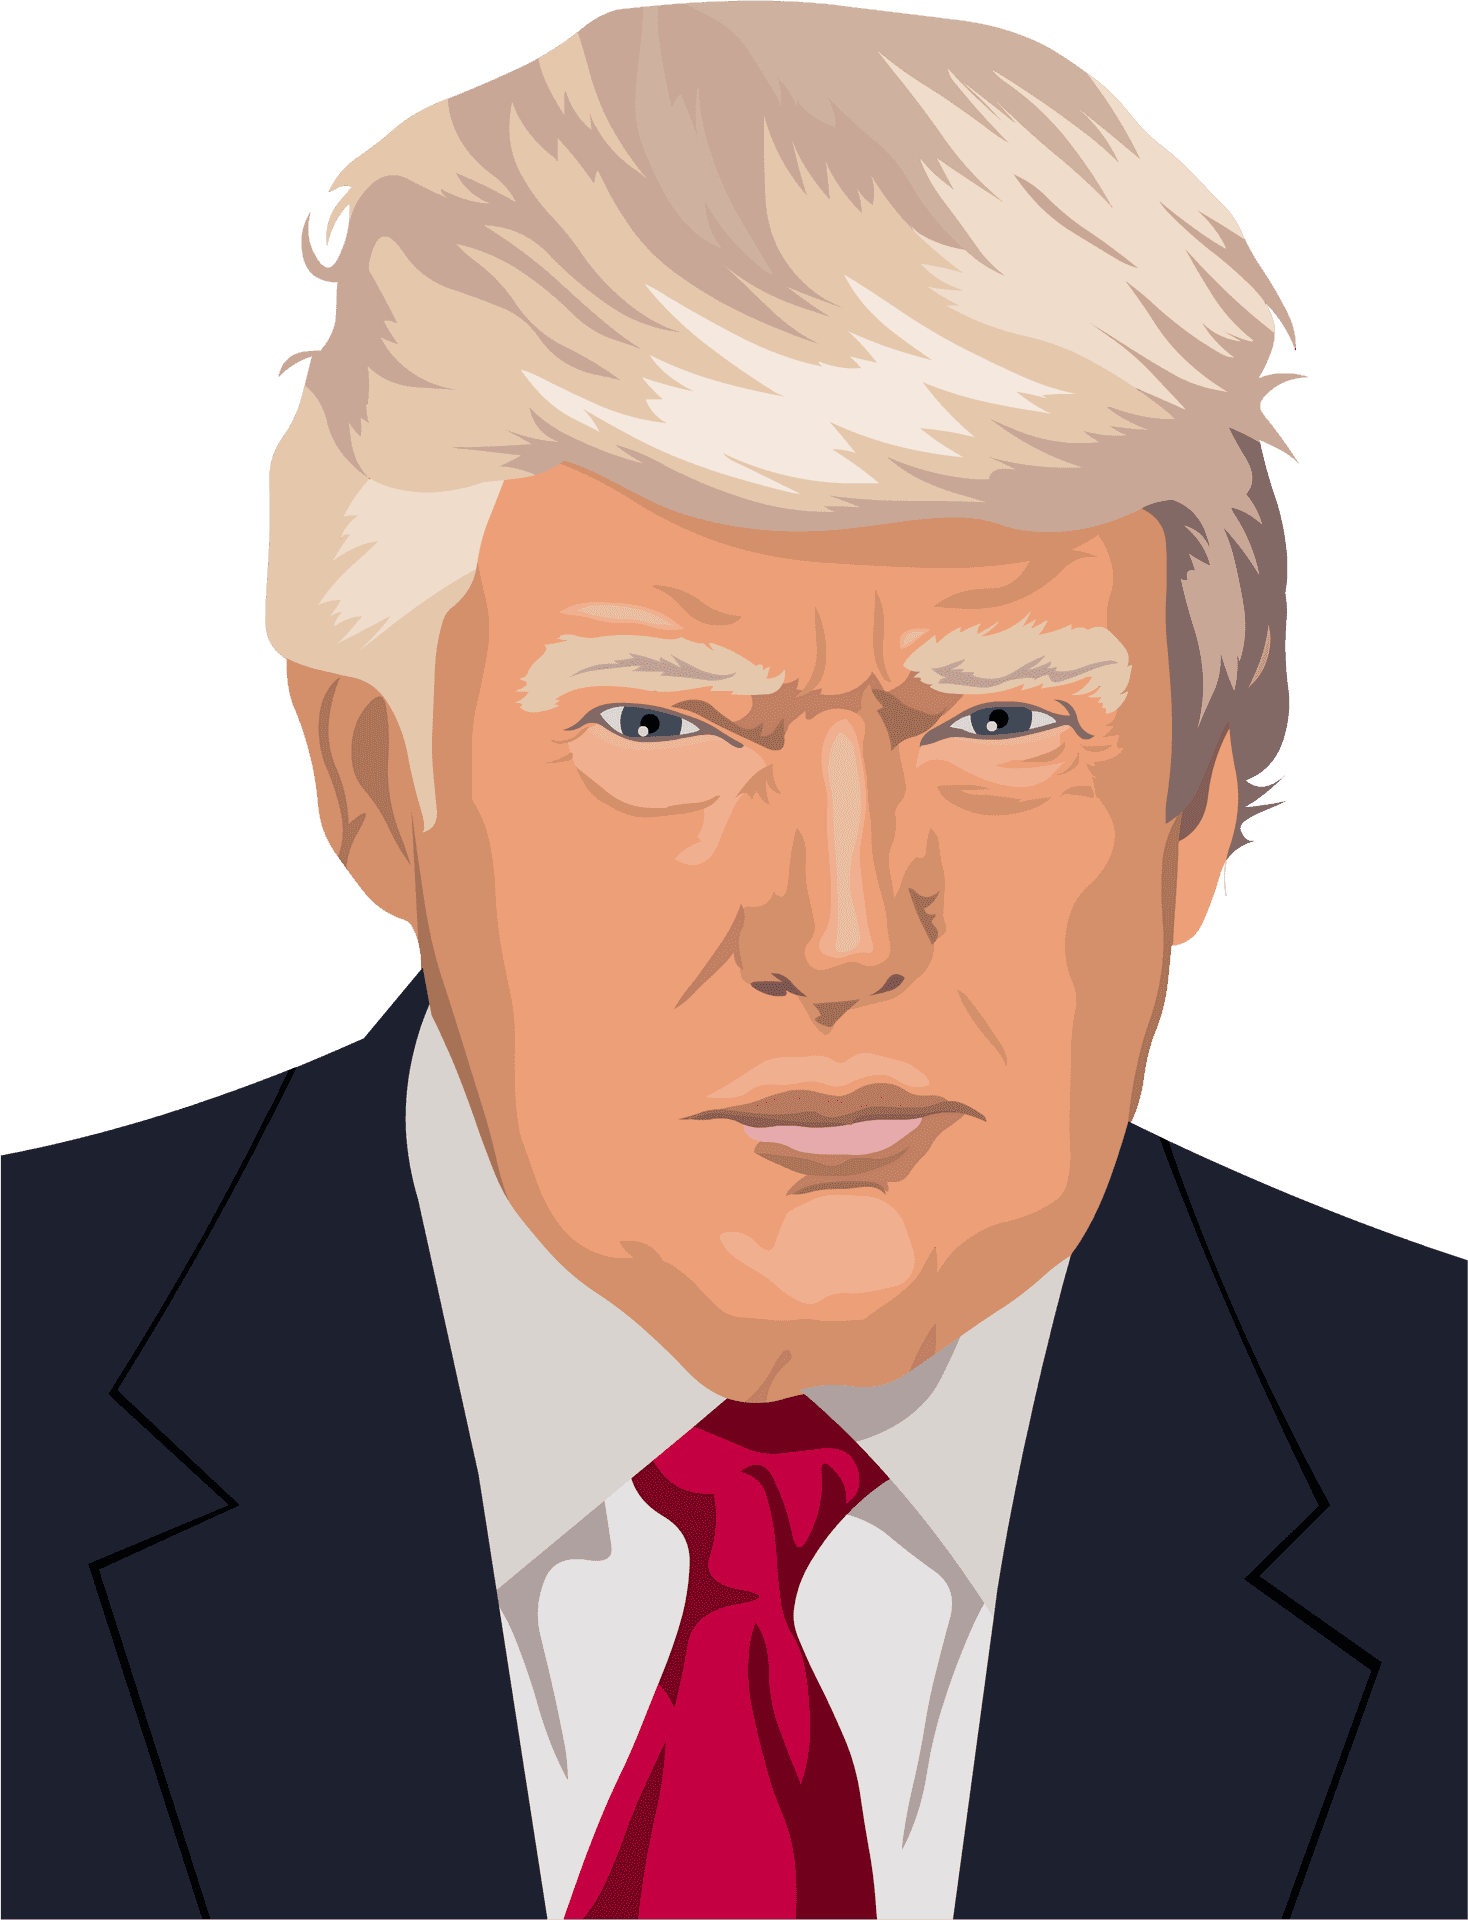 Illustrated Portraitof Donald Trump PNG image